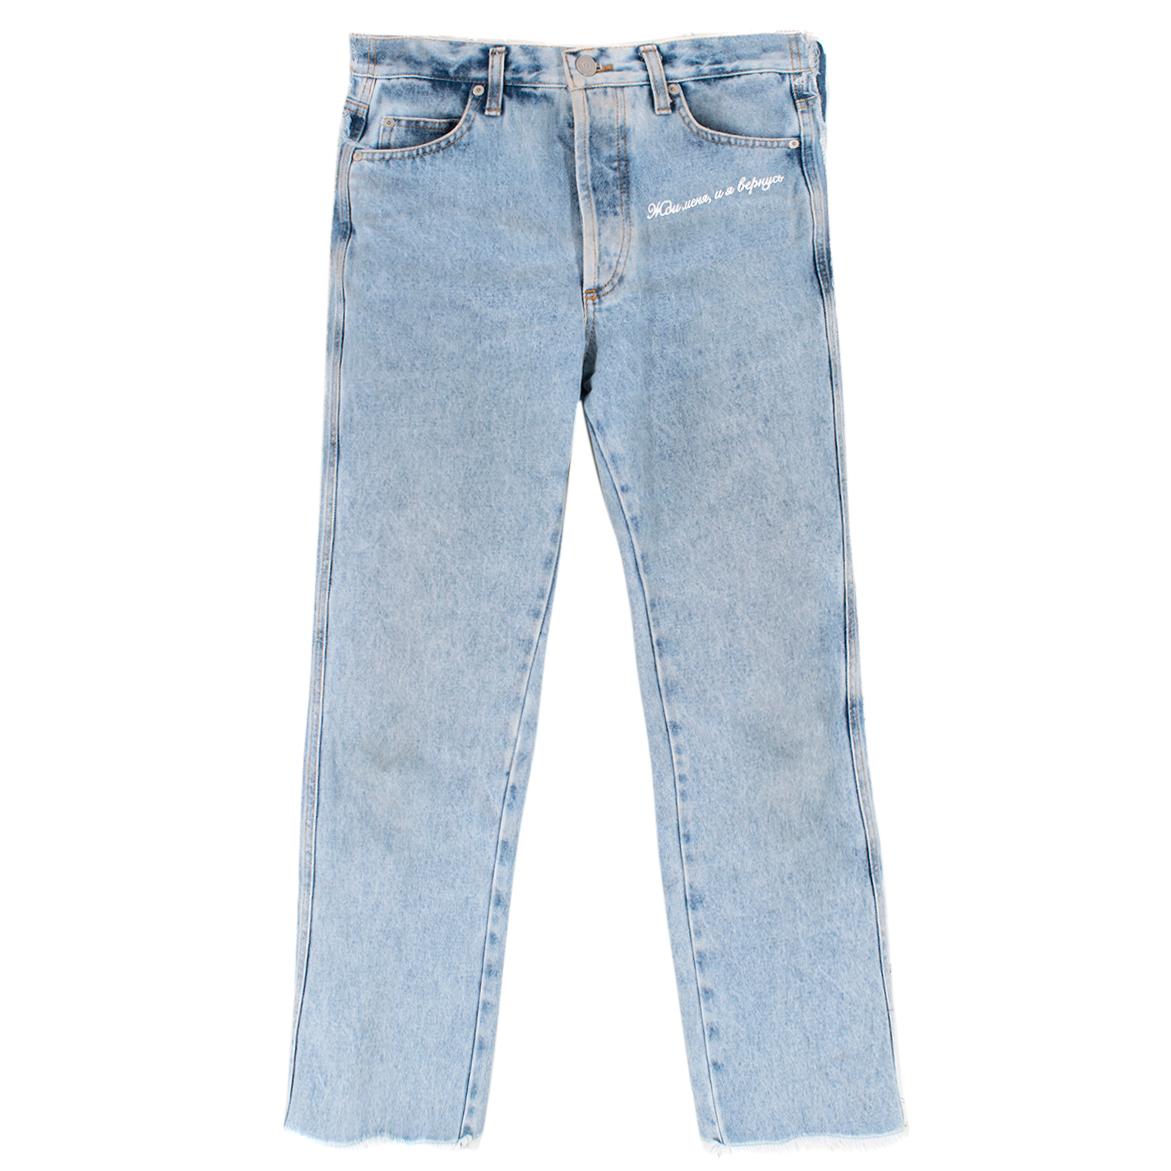 Natasha Zinko Two-Tone Distressed Cropped Jeans US 4 For Sale